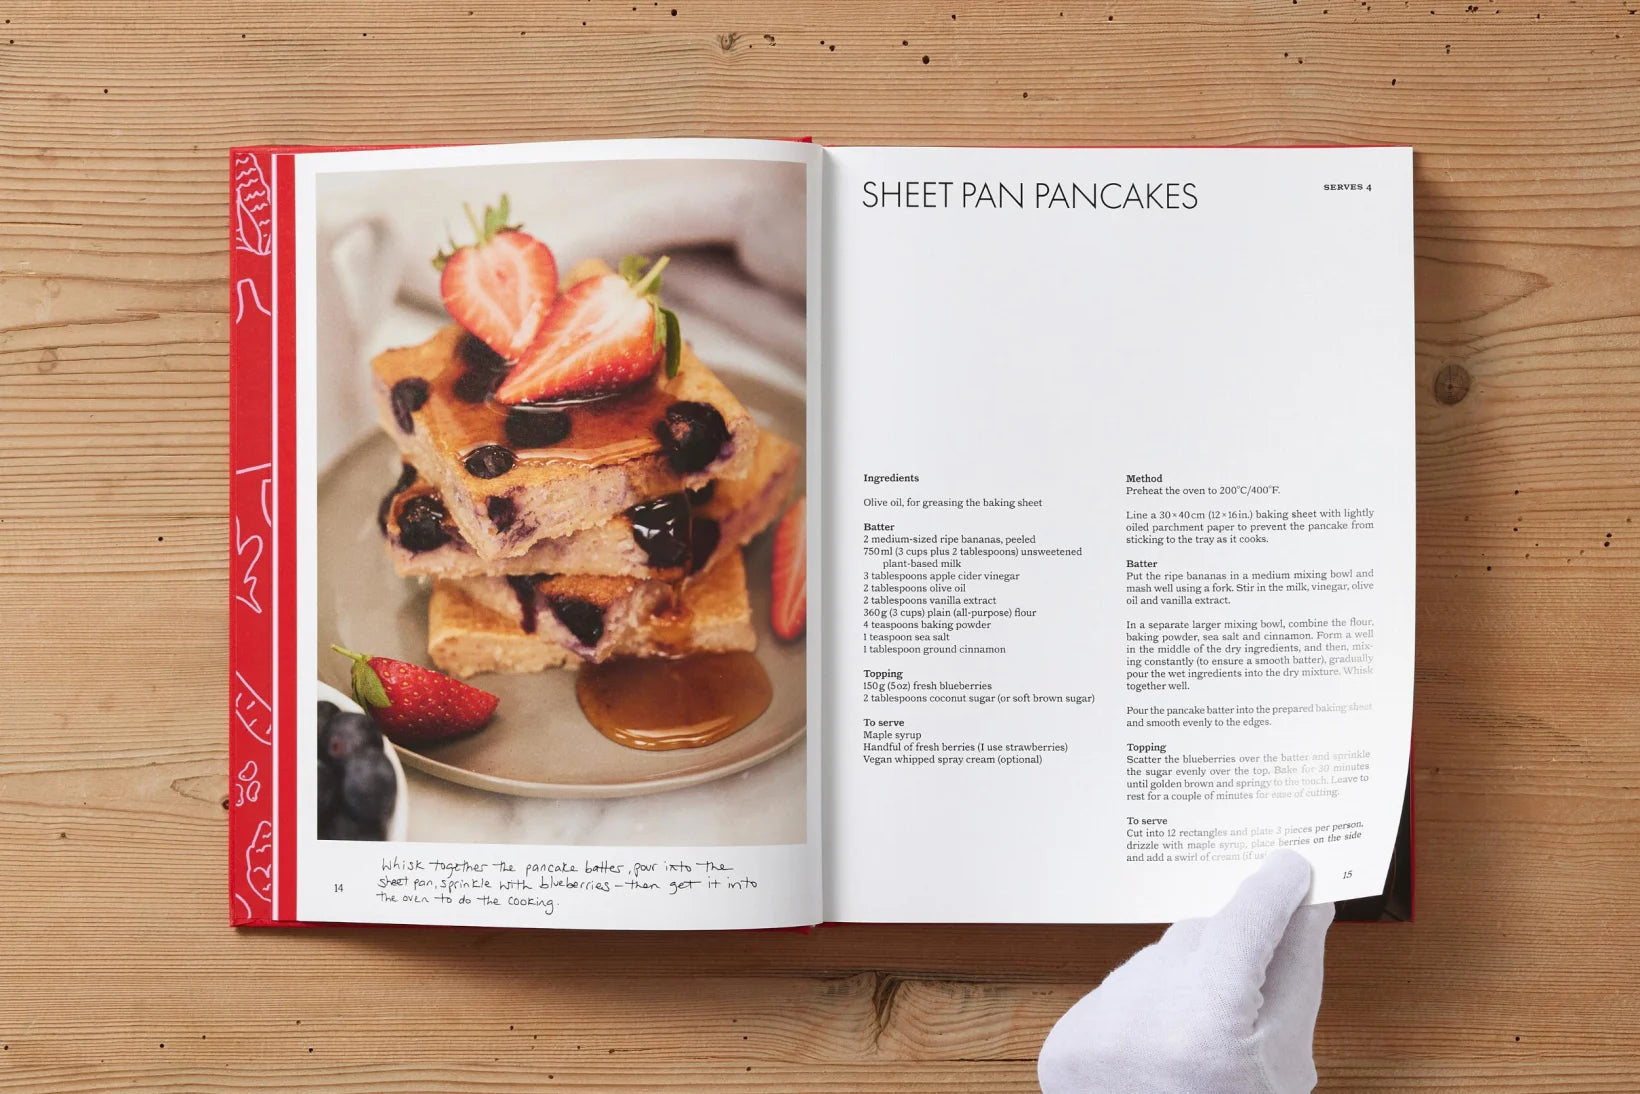 Mary McCartney Feeding Creativity - A Cookbook For Friends & Family